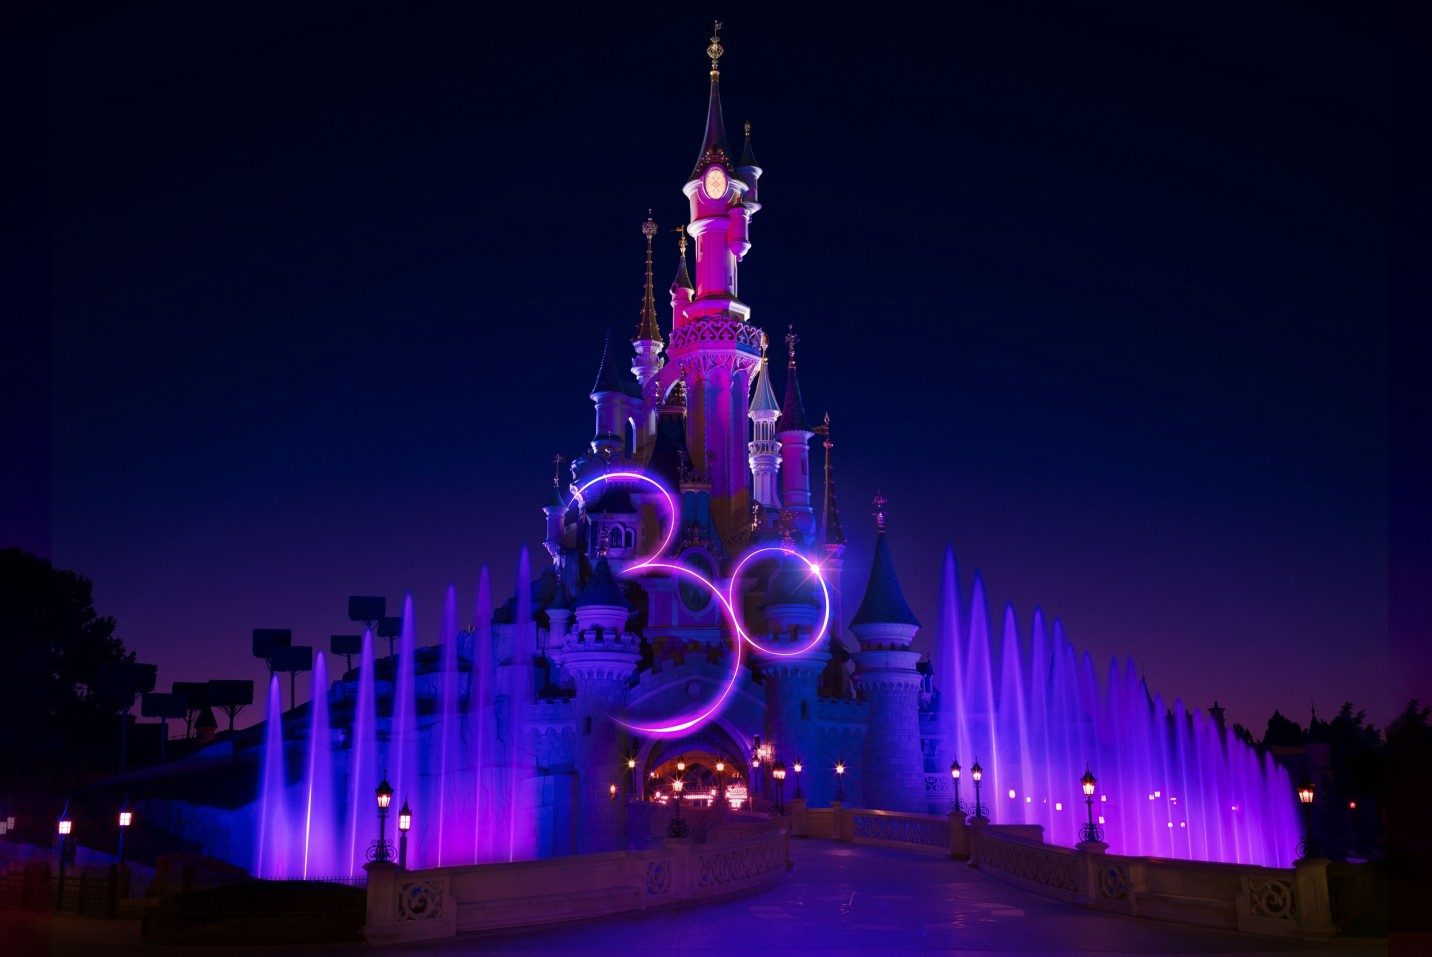 Disneyland Paris: where the magic never ends